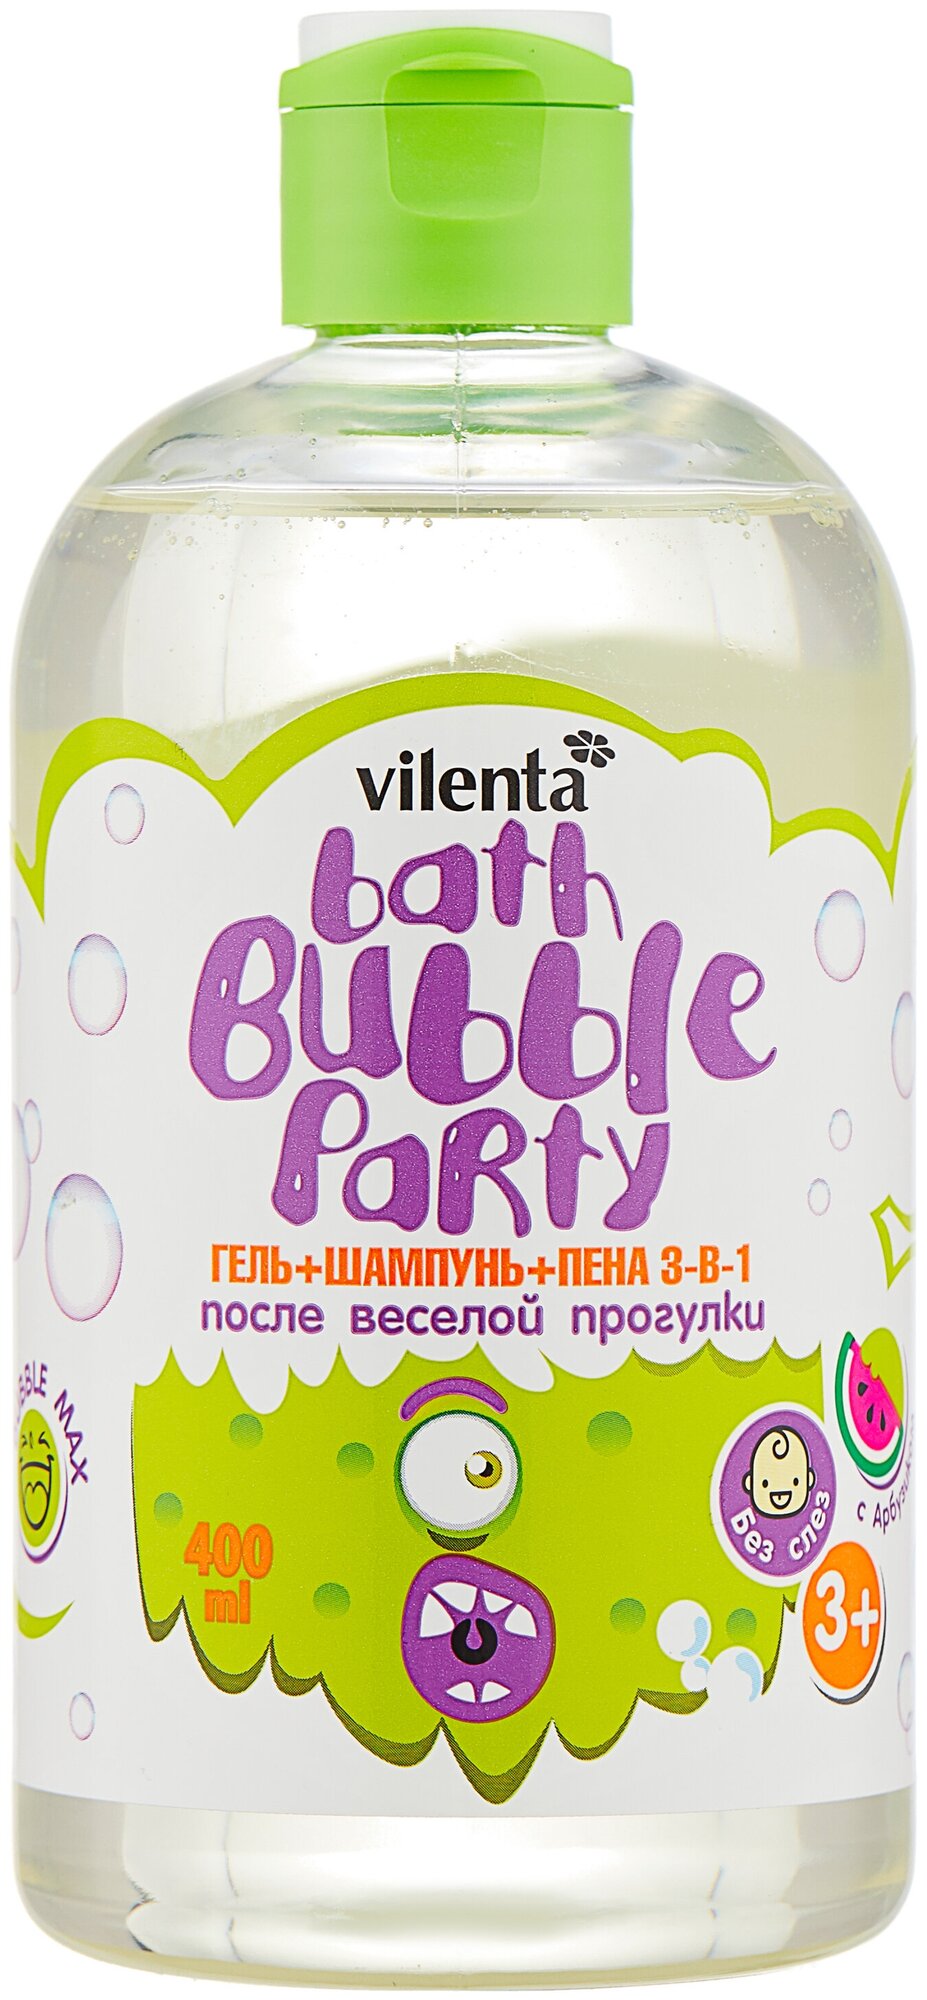 Vilenta Гель+Шампунь+Пена 3-в-1 Bath Bubble Party После веселой прогулки